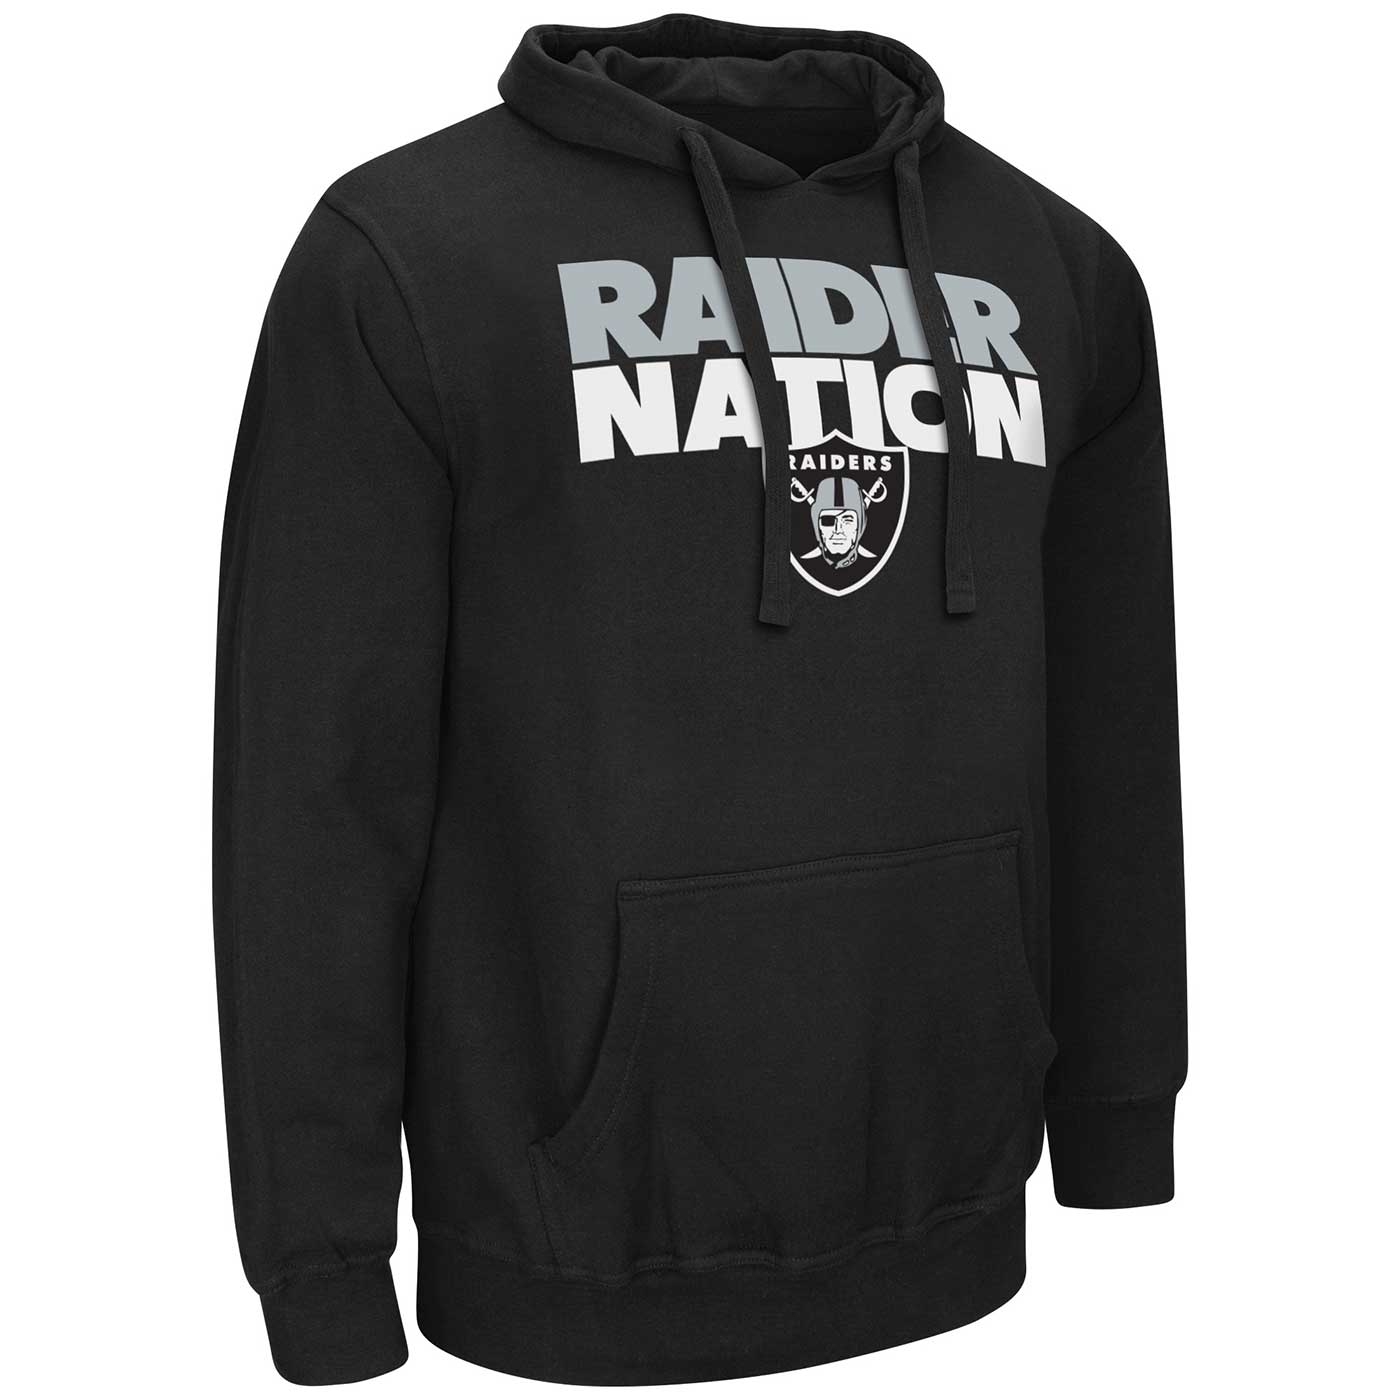 raider nation jacket